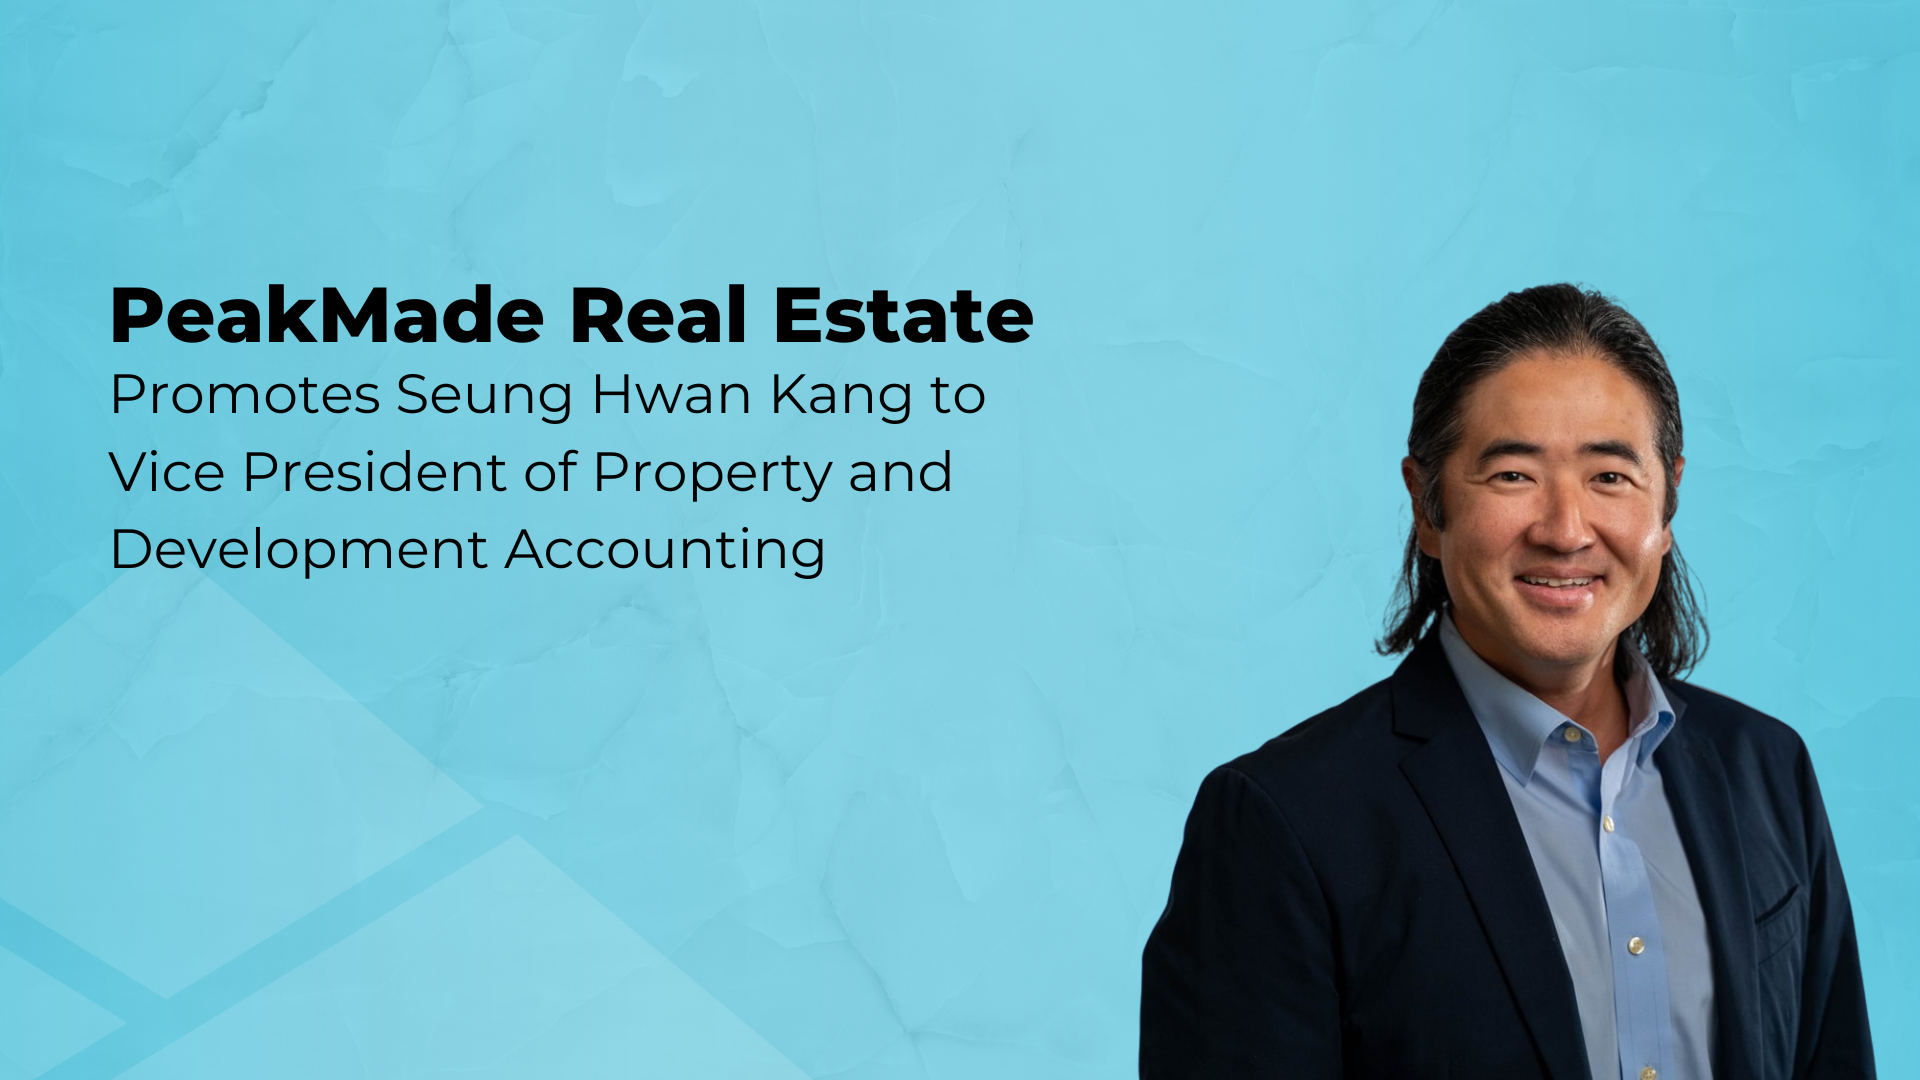 Vice President of Property & Development Accounting - Seung Hwan Kang